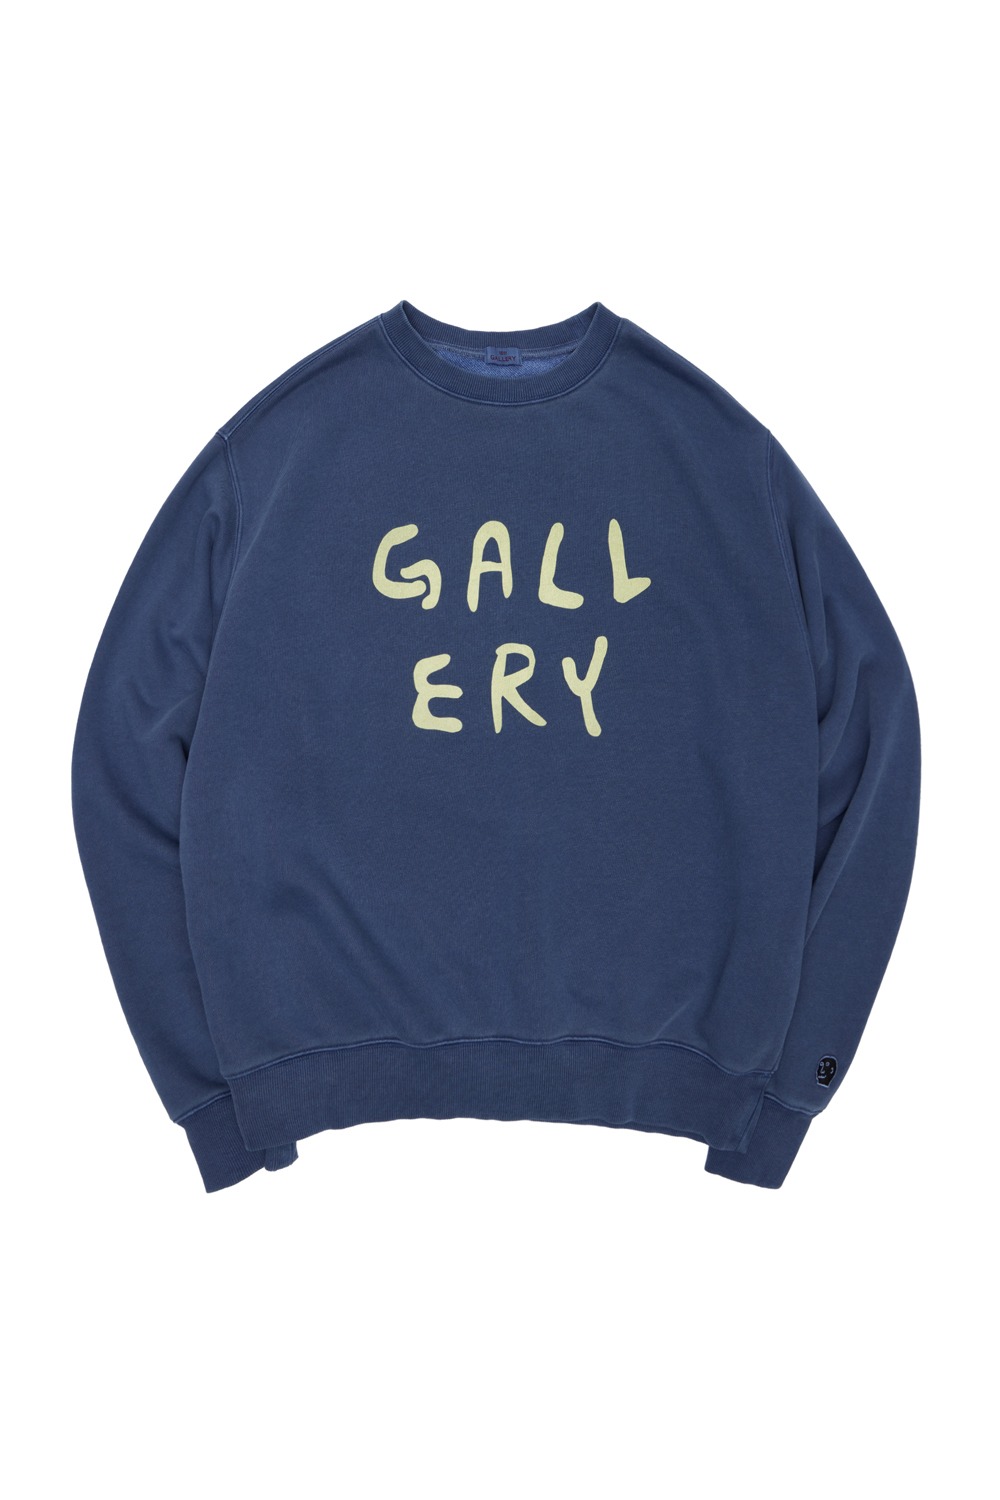 Gallery Logo Graphic Sweatshirt - Navy